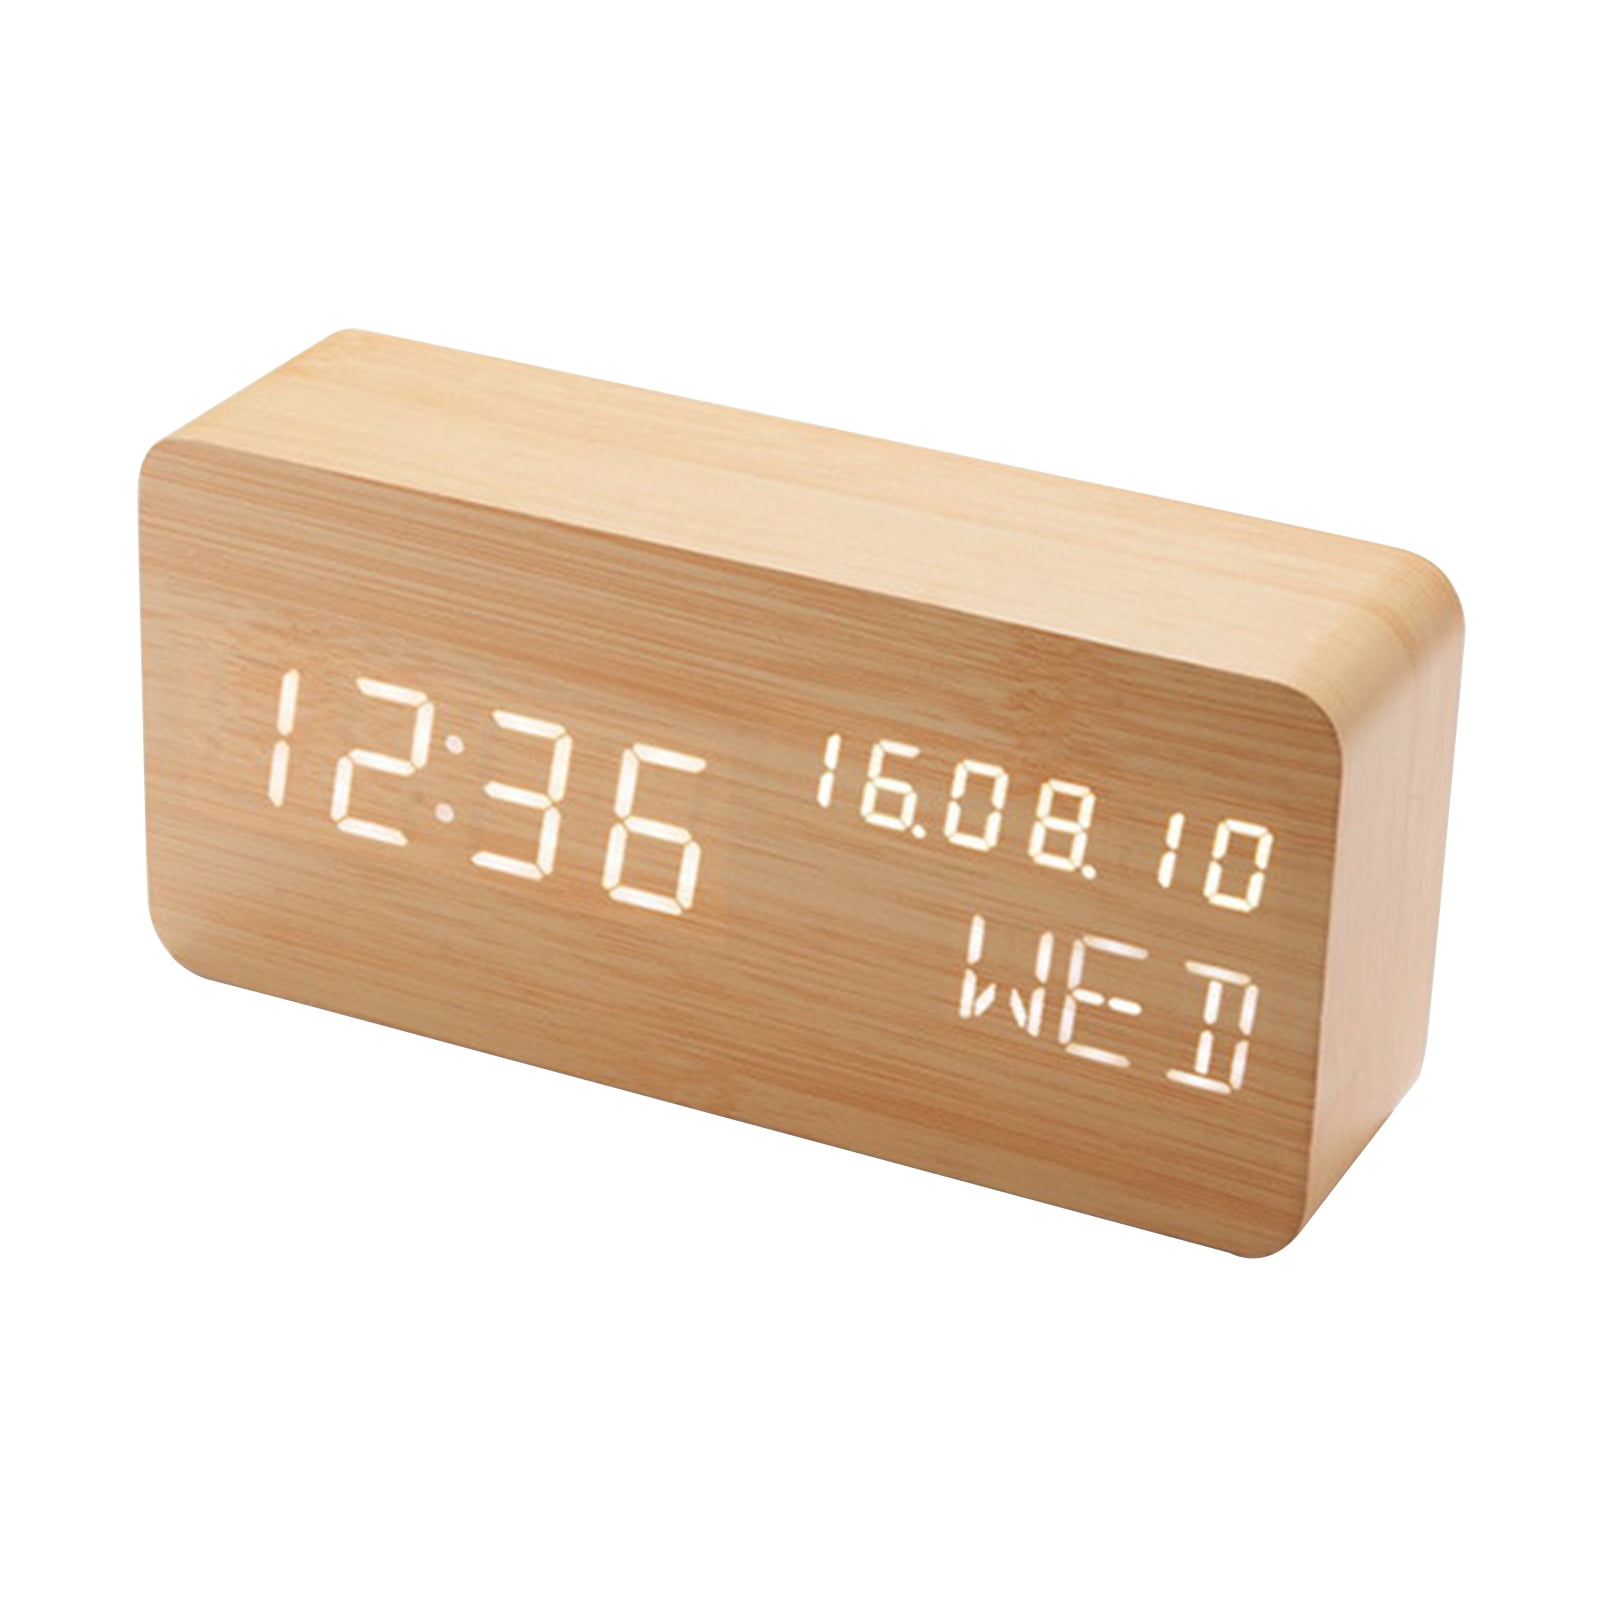 Voice Control LED Display Temperature Digital Wood Wooden Alarm Clock NEW